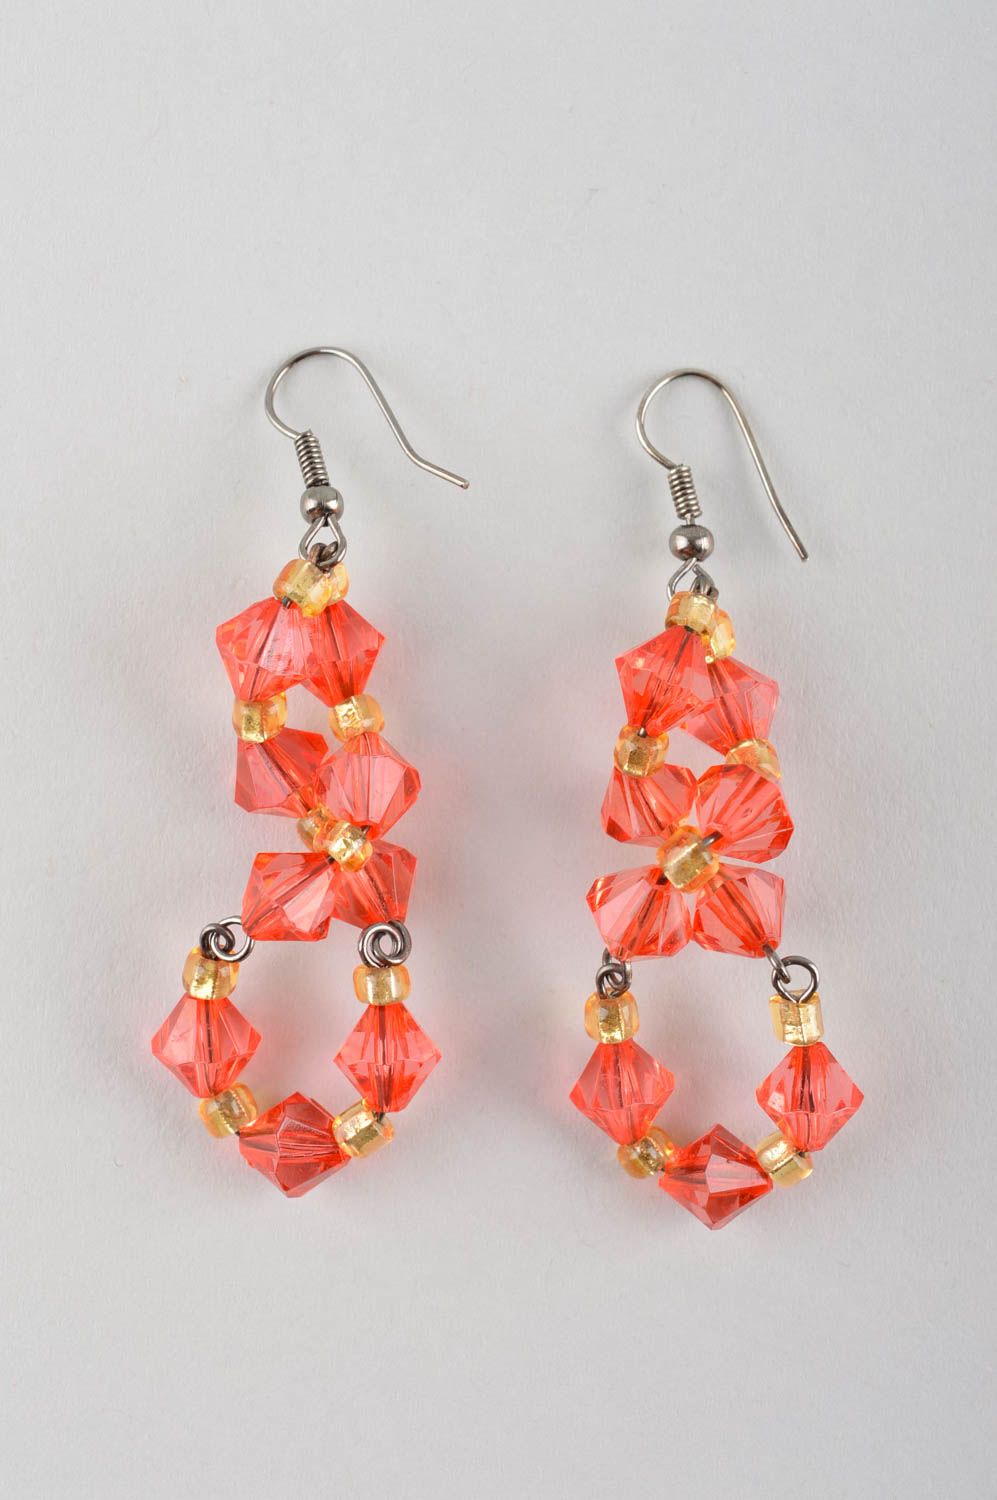 Handmade earrings designer accessories for women ladies earrings gifts for girls photo 3